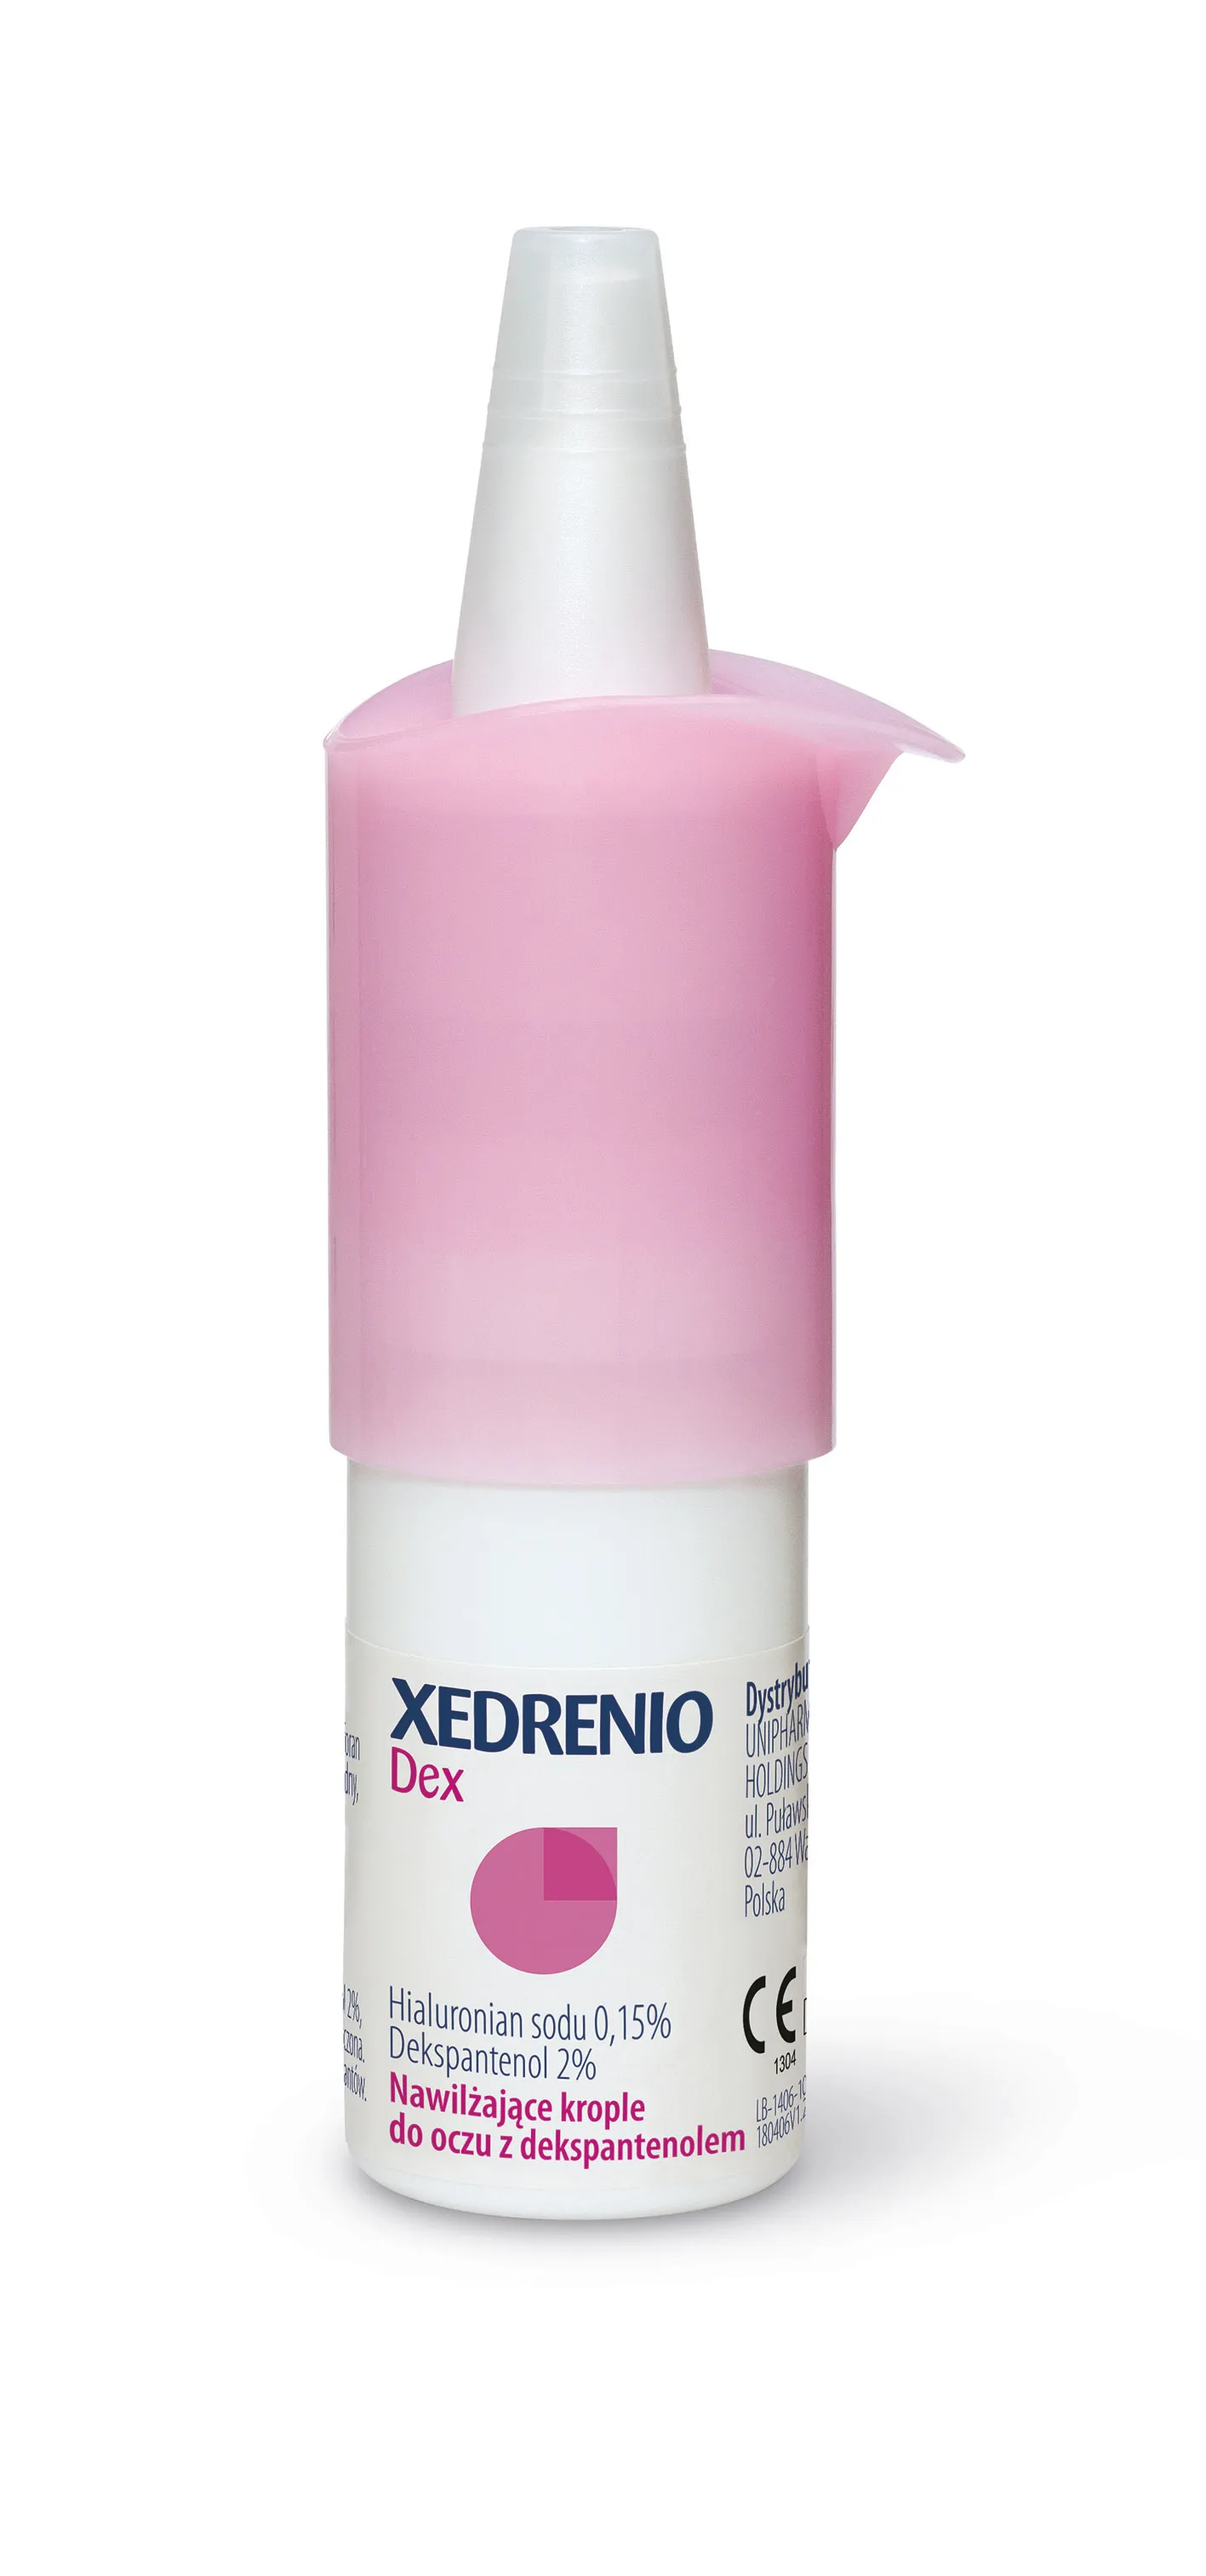 Xedrenio Dex, krople do oczu, 10 ml 